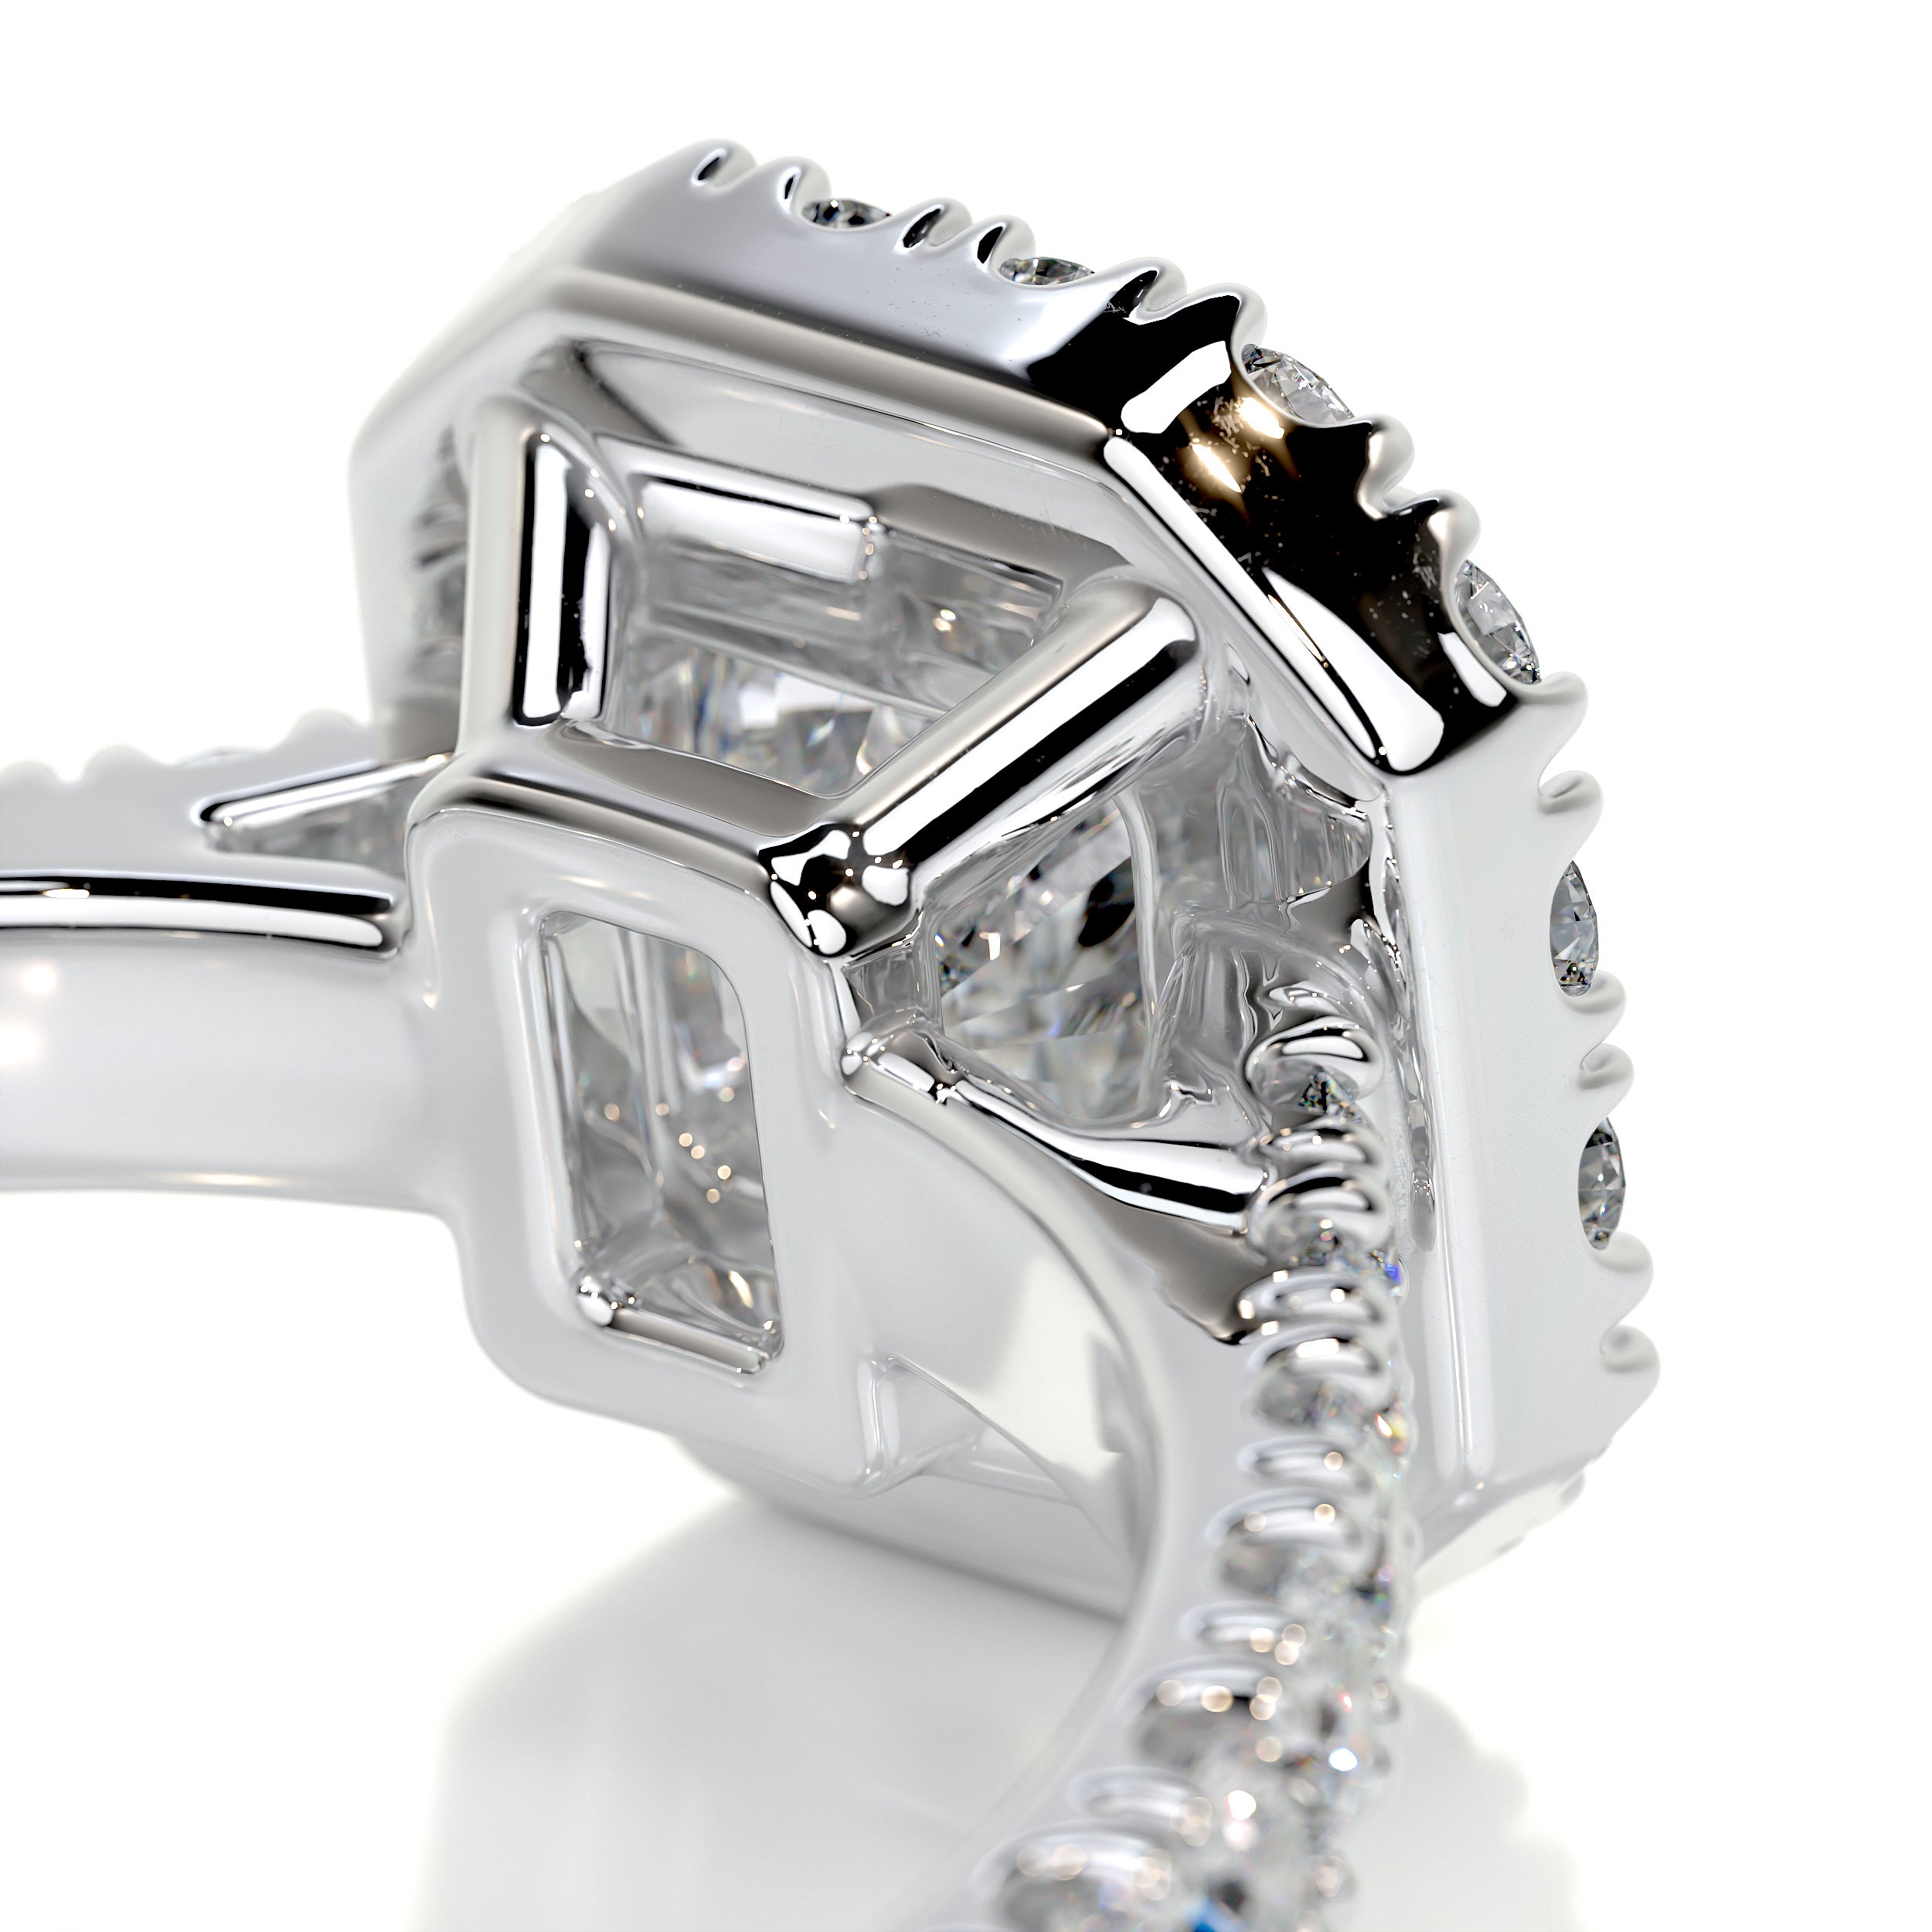 Cora Diamond Engagement Ring -14K White Gold